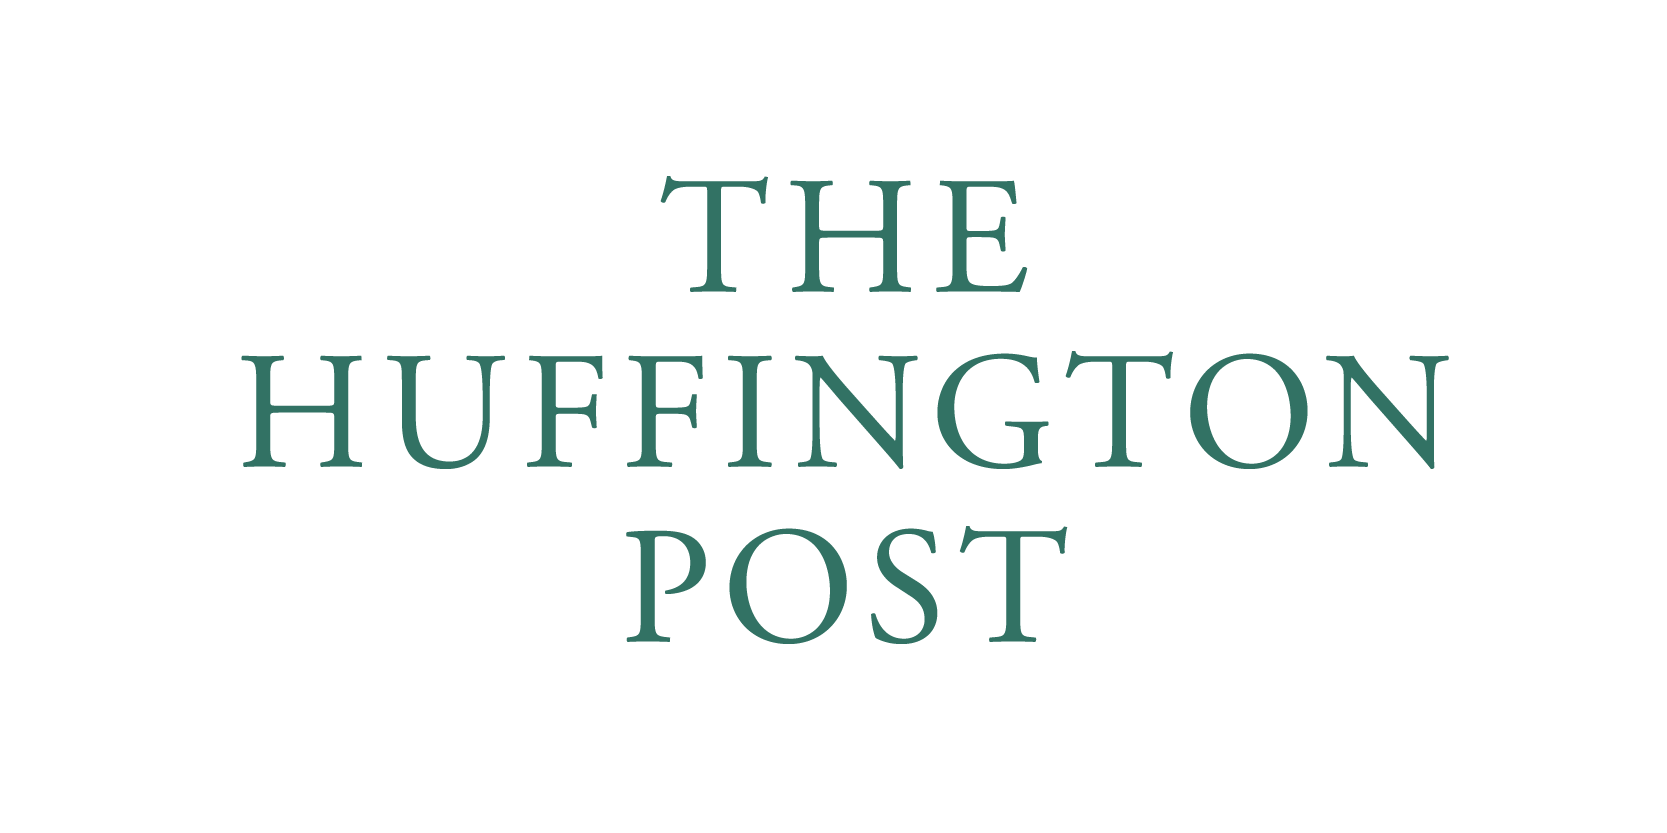 Huff Post Logo.png